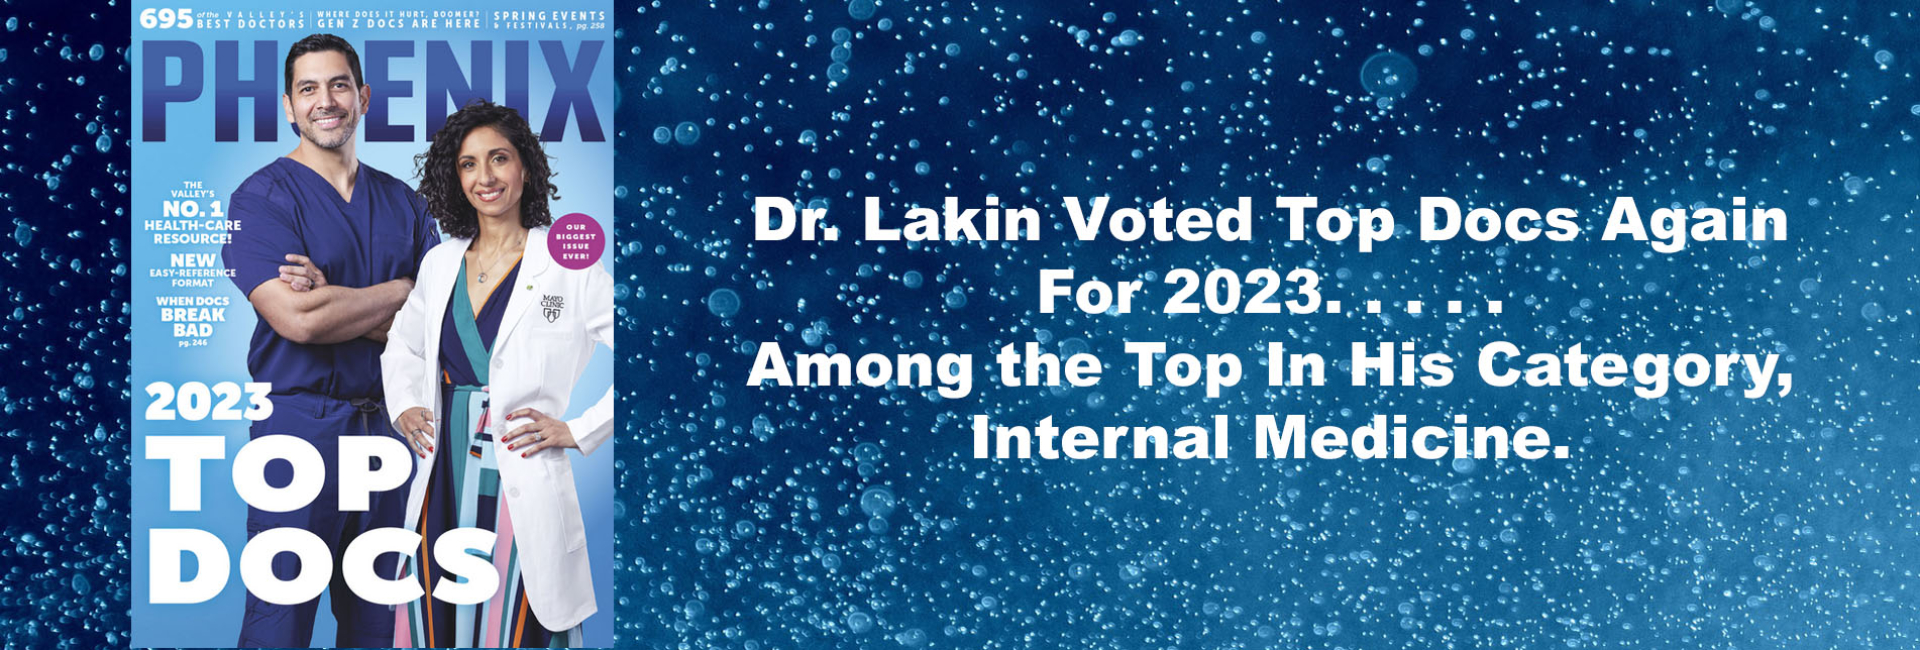 Congratulations: Dr. Lakin Named "Top Docs" Again For 2023!